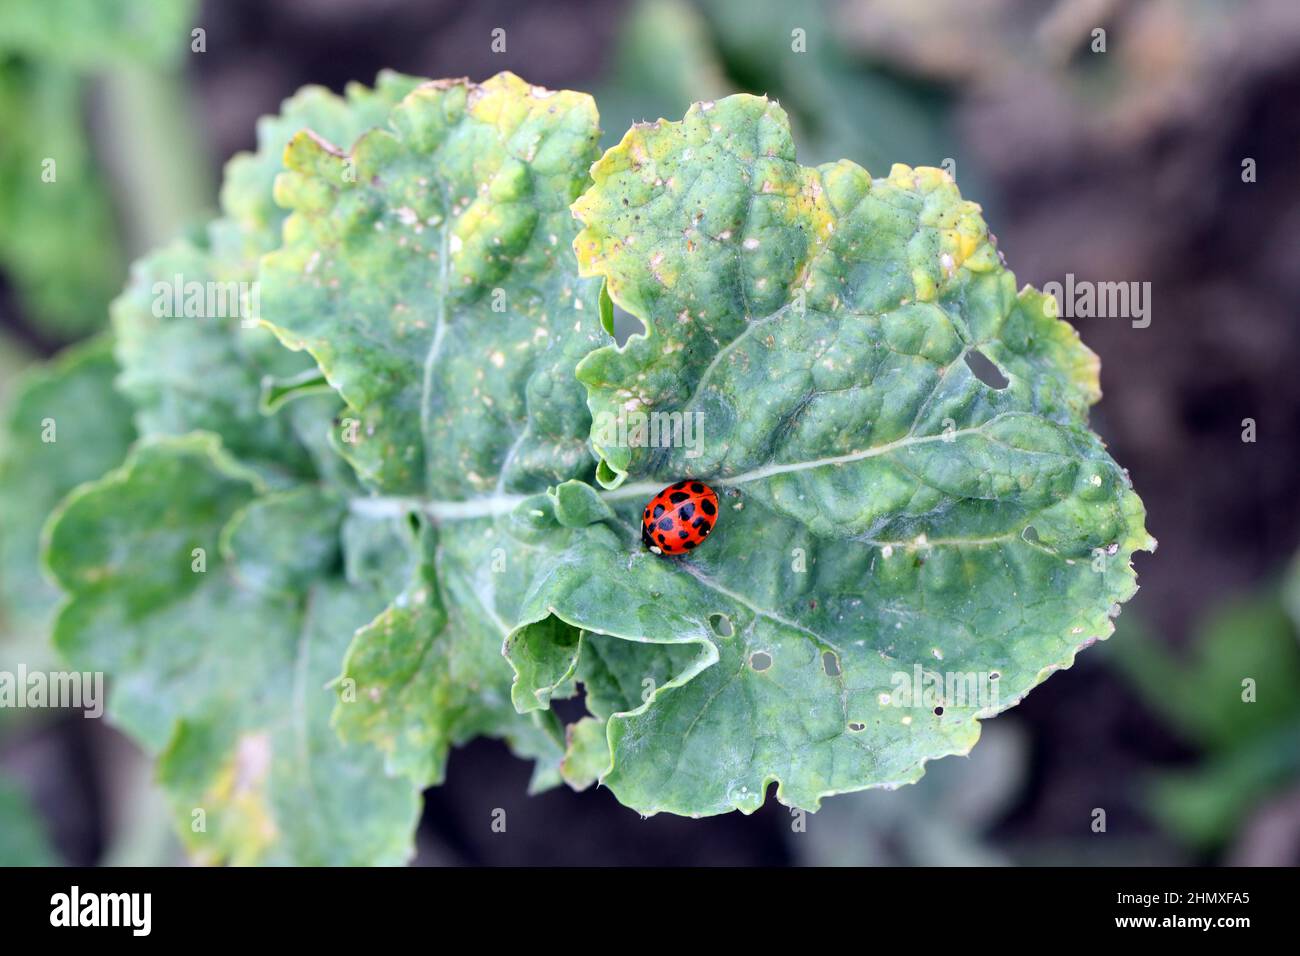 Primo piano del Ladybird asiatico multicolore Ladybug (Harmonia axyridis) su piante verdi. Foto Stock